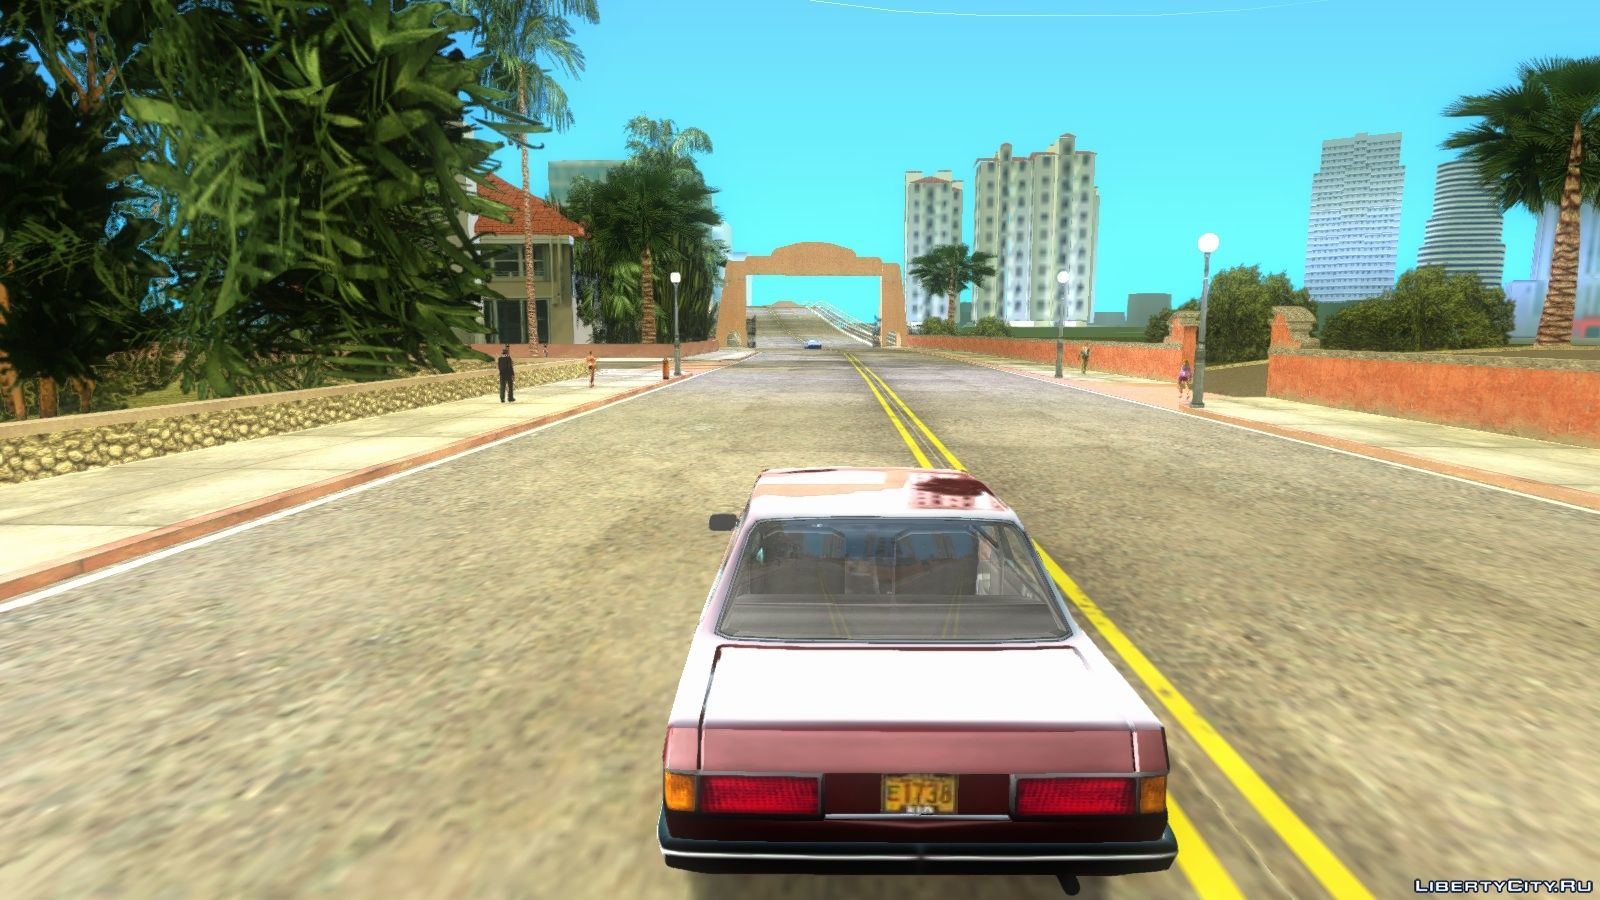 Гта вайс сити моды на графику. ГТА Вайс Сити Mod. Grand Theft auto: vice City моды. GTA vice City 2001. GTA vice City City Mod.